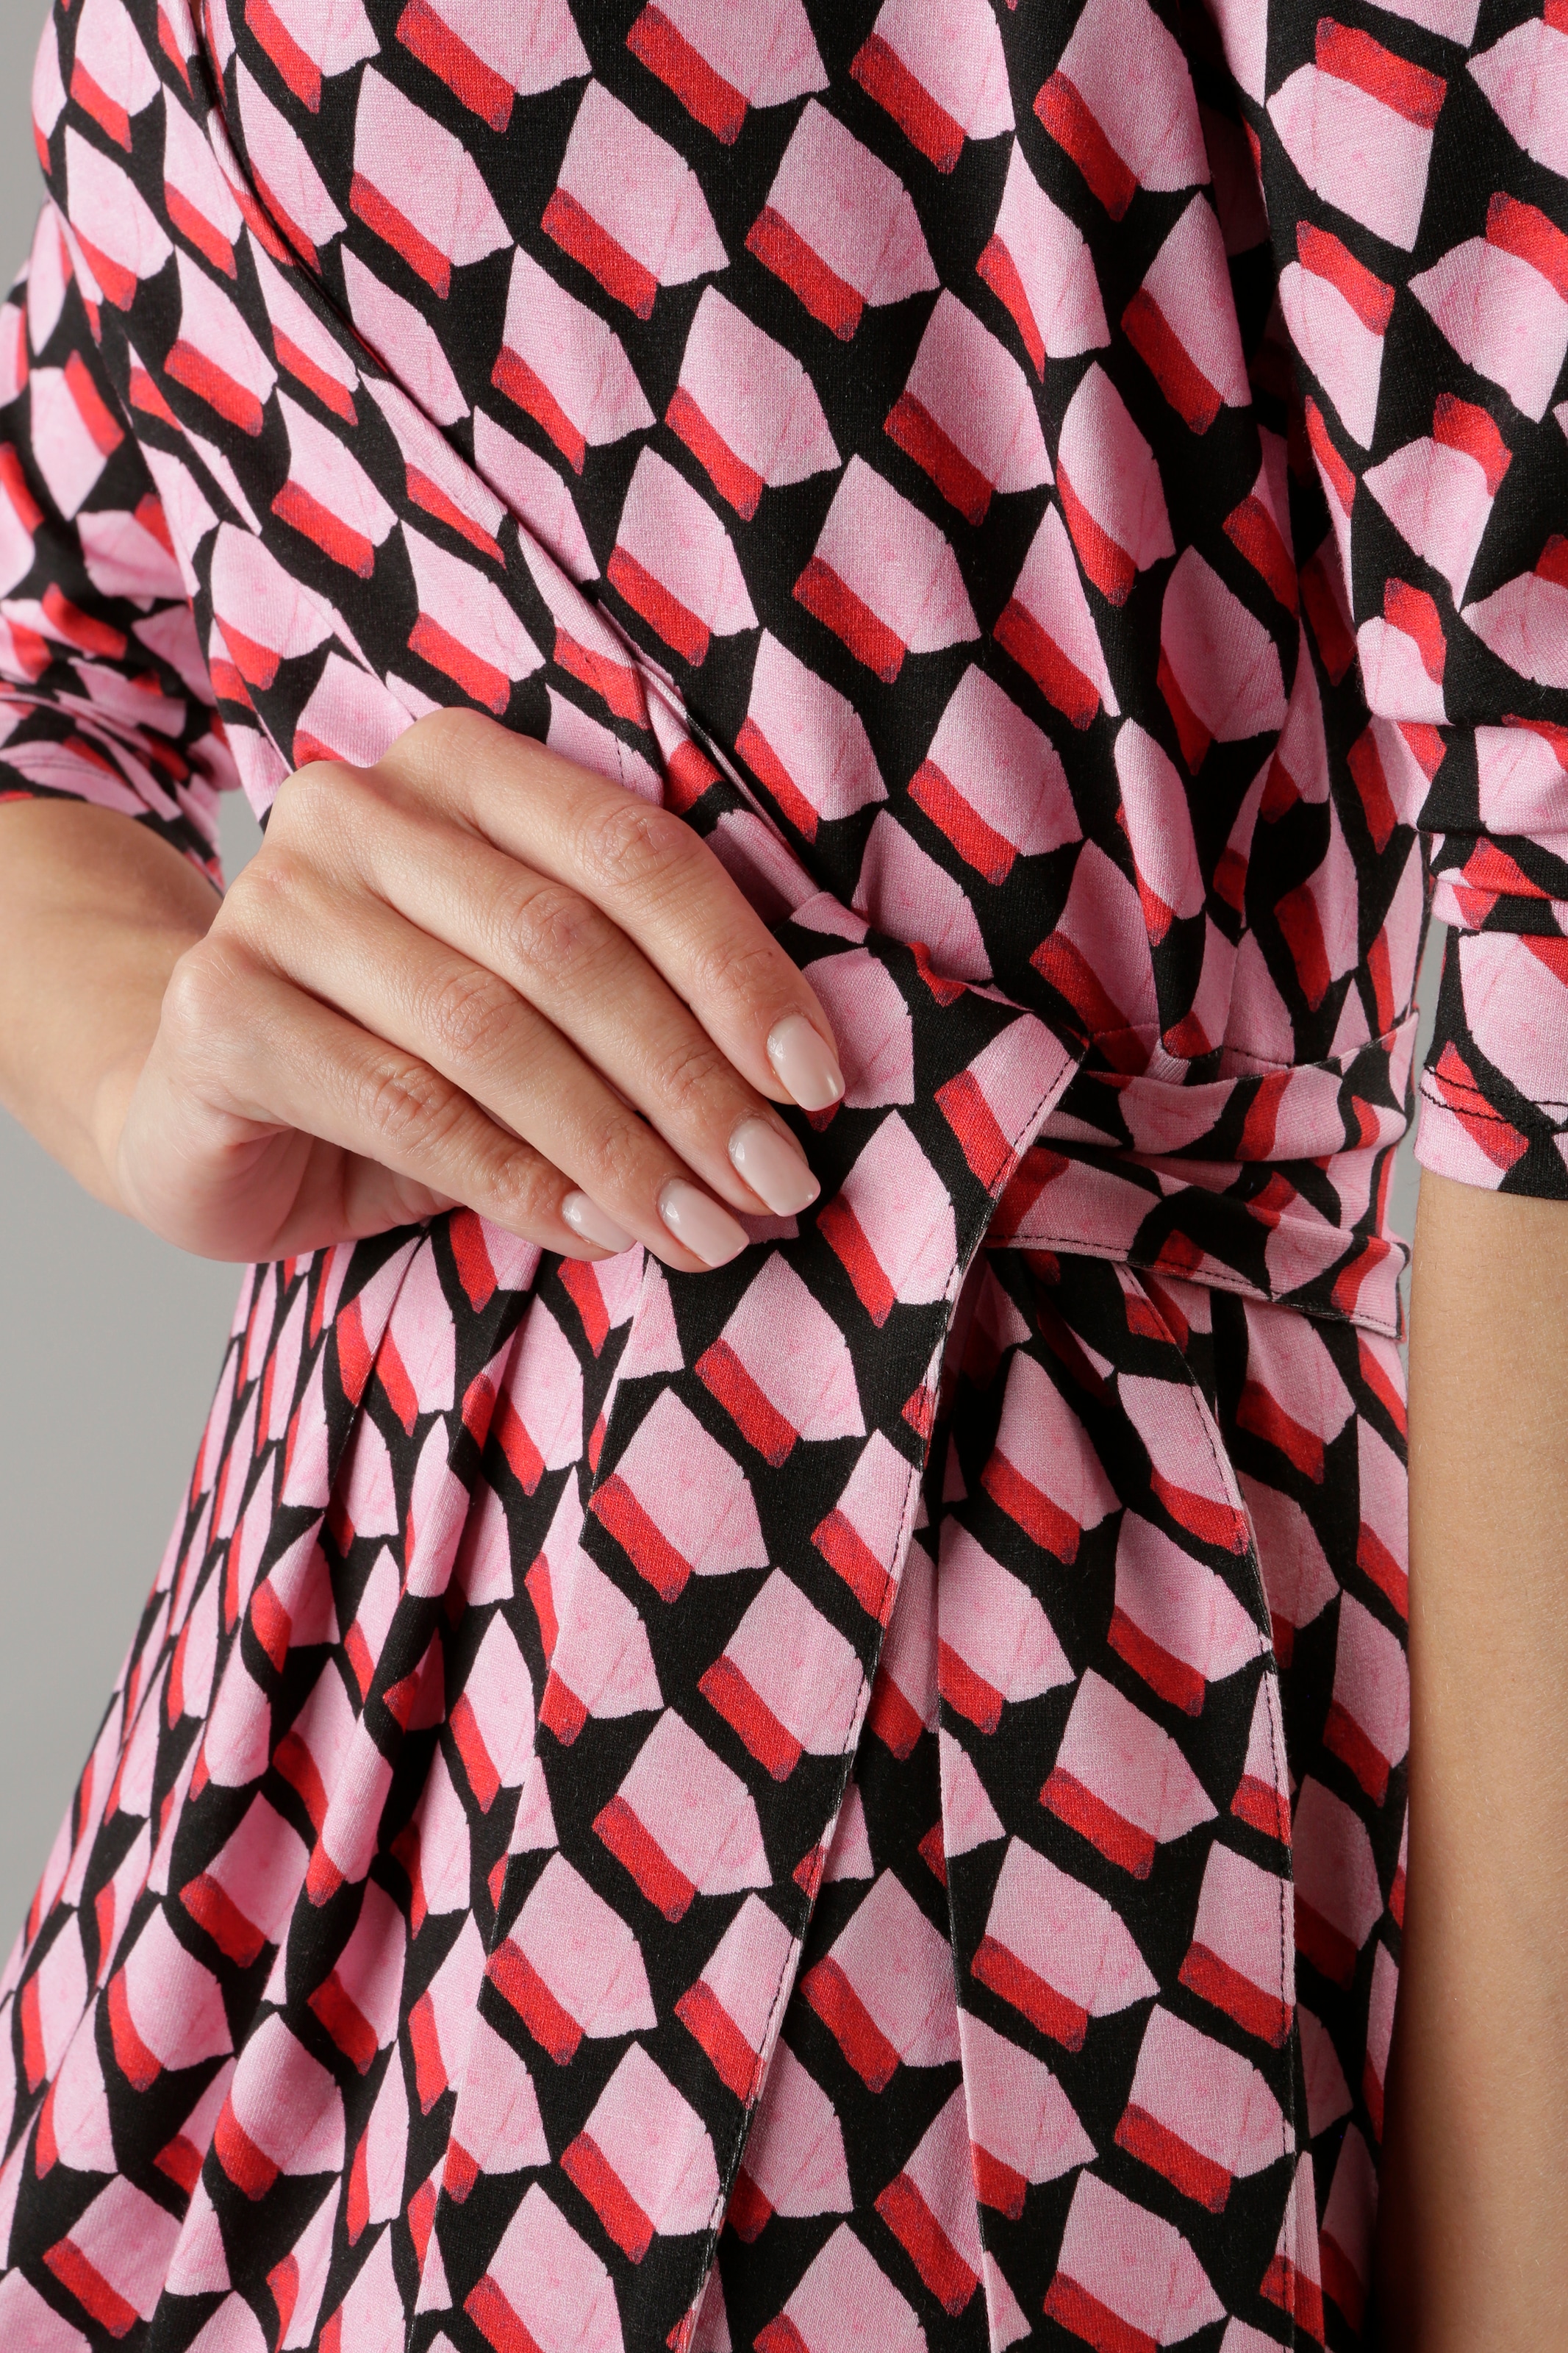 Aniston SELECTED OTTOversand bei Wickeloptik und in Allover-Muster Ausschnitt mit Jerseykleid